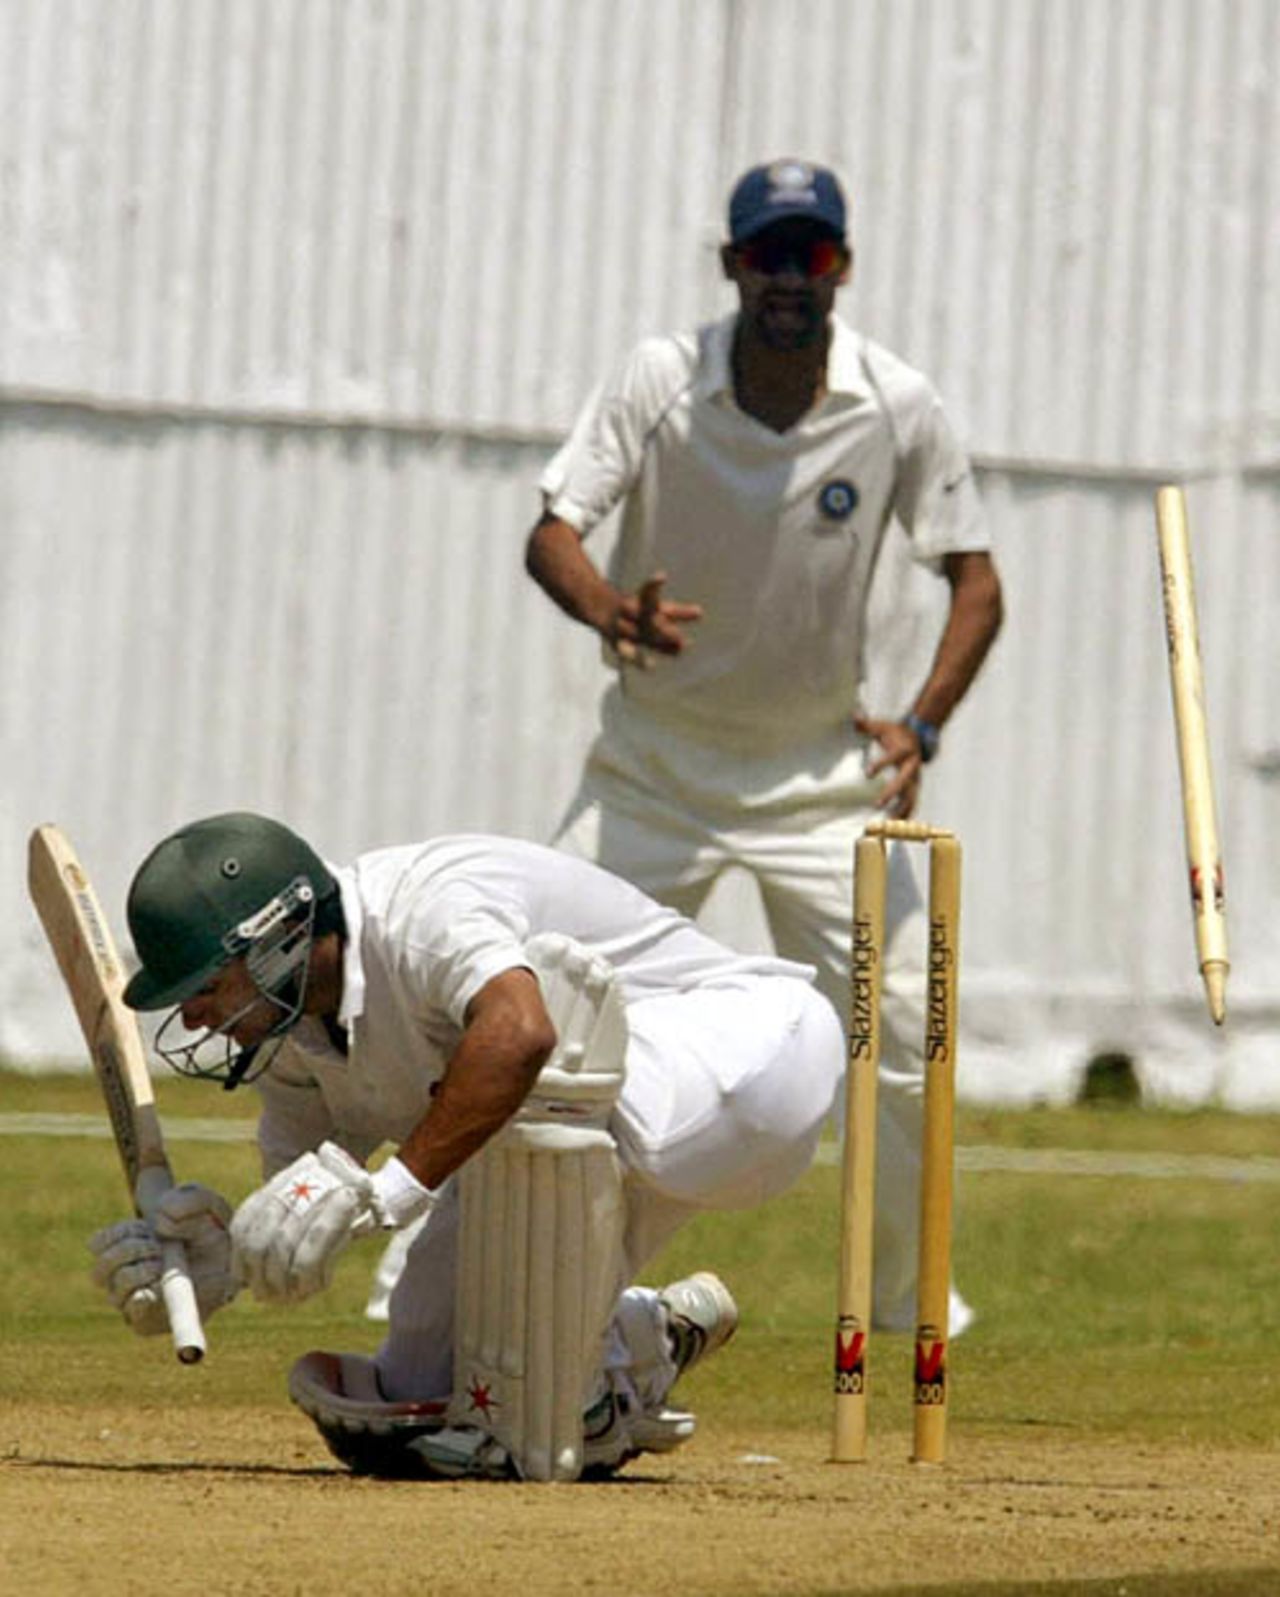 Pankaj Singh sends Tanmay Mishra's off stump for a walk, Kenya v India A, 1st match, Mombasa, 1st day, August 5, 2007